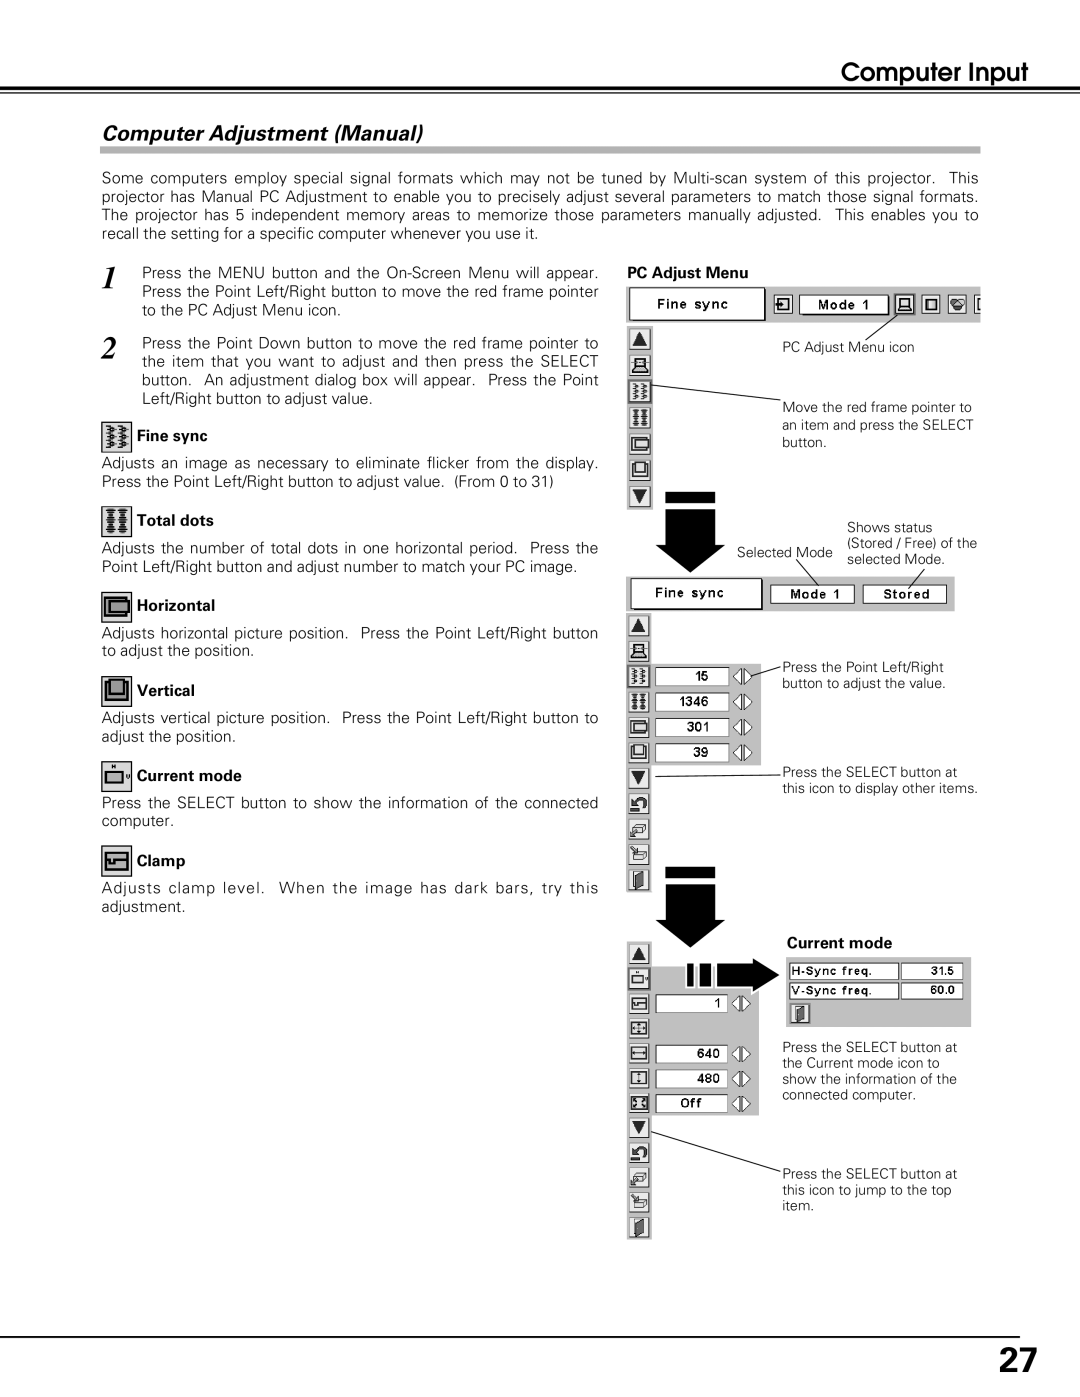 Eiki LC-XB15 Computer Adjustment Manual, Computer Input, Fine sync, Total dots, Horizontal, Vertical, Current mode, Clamp 